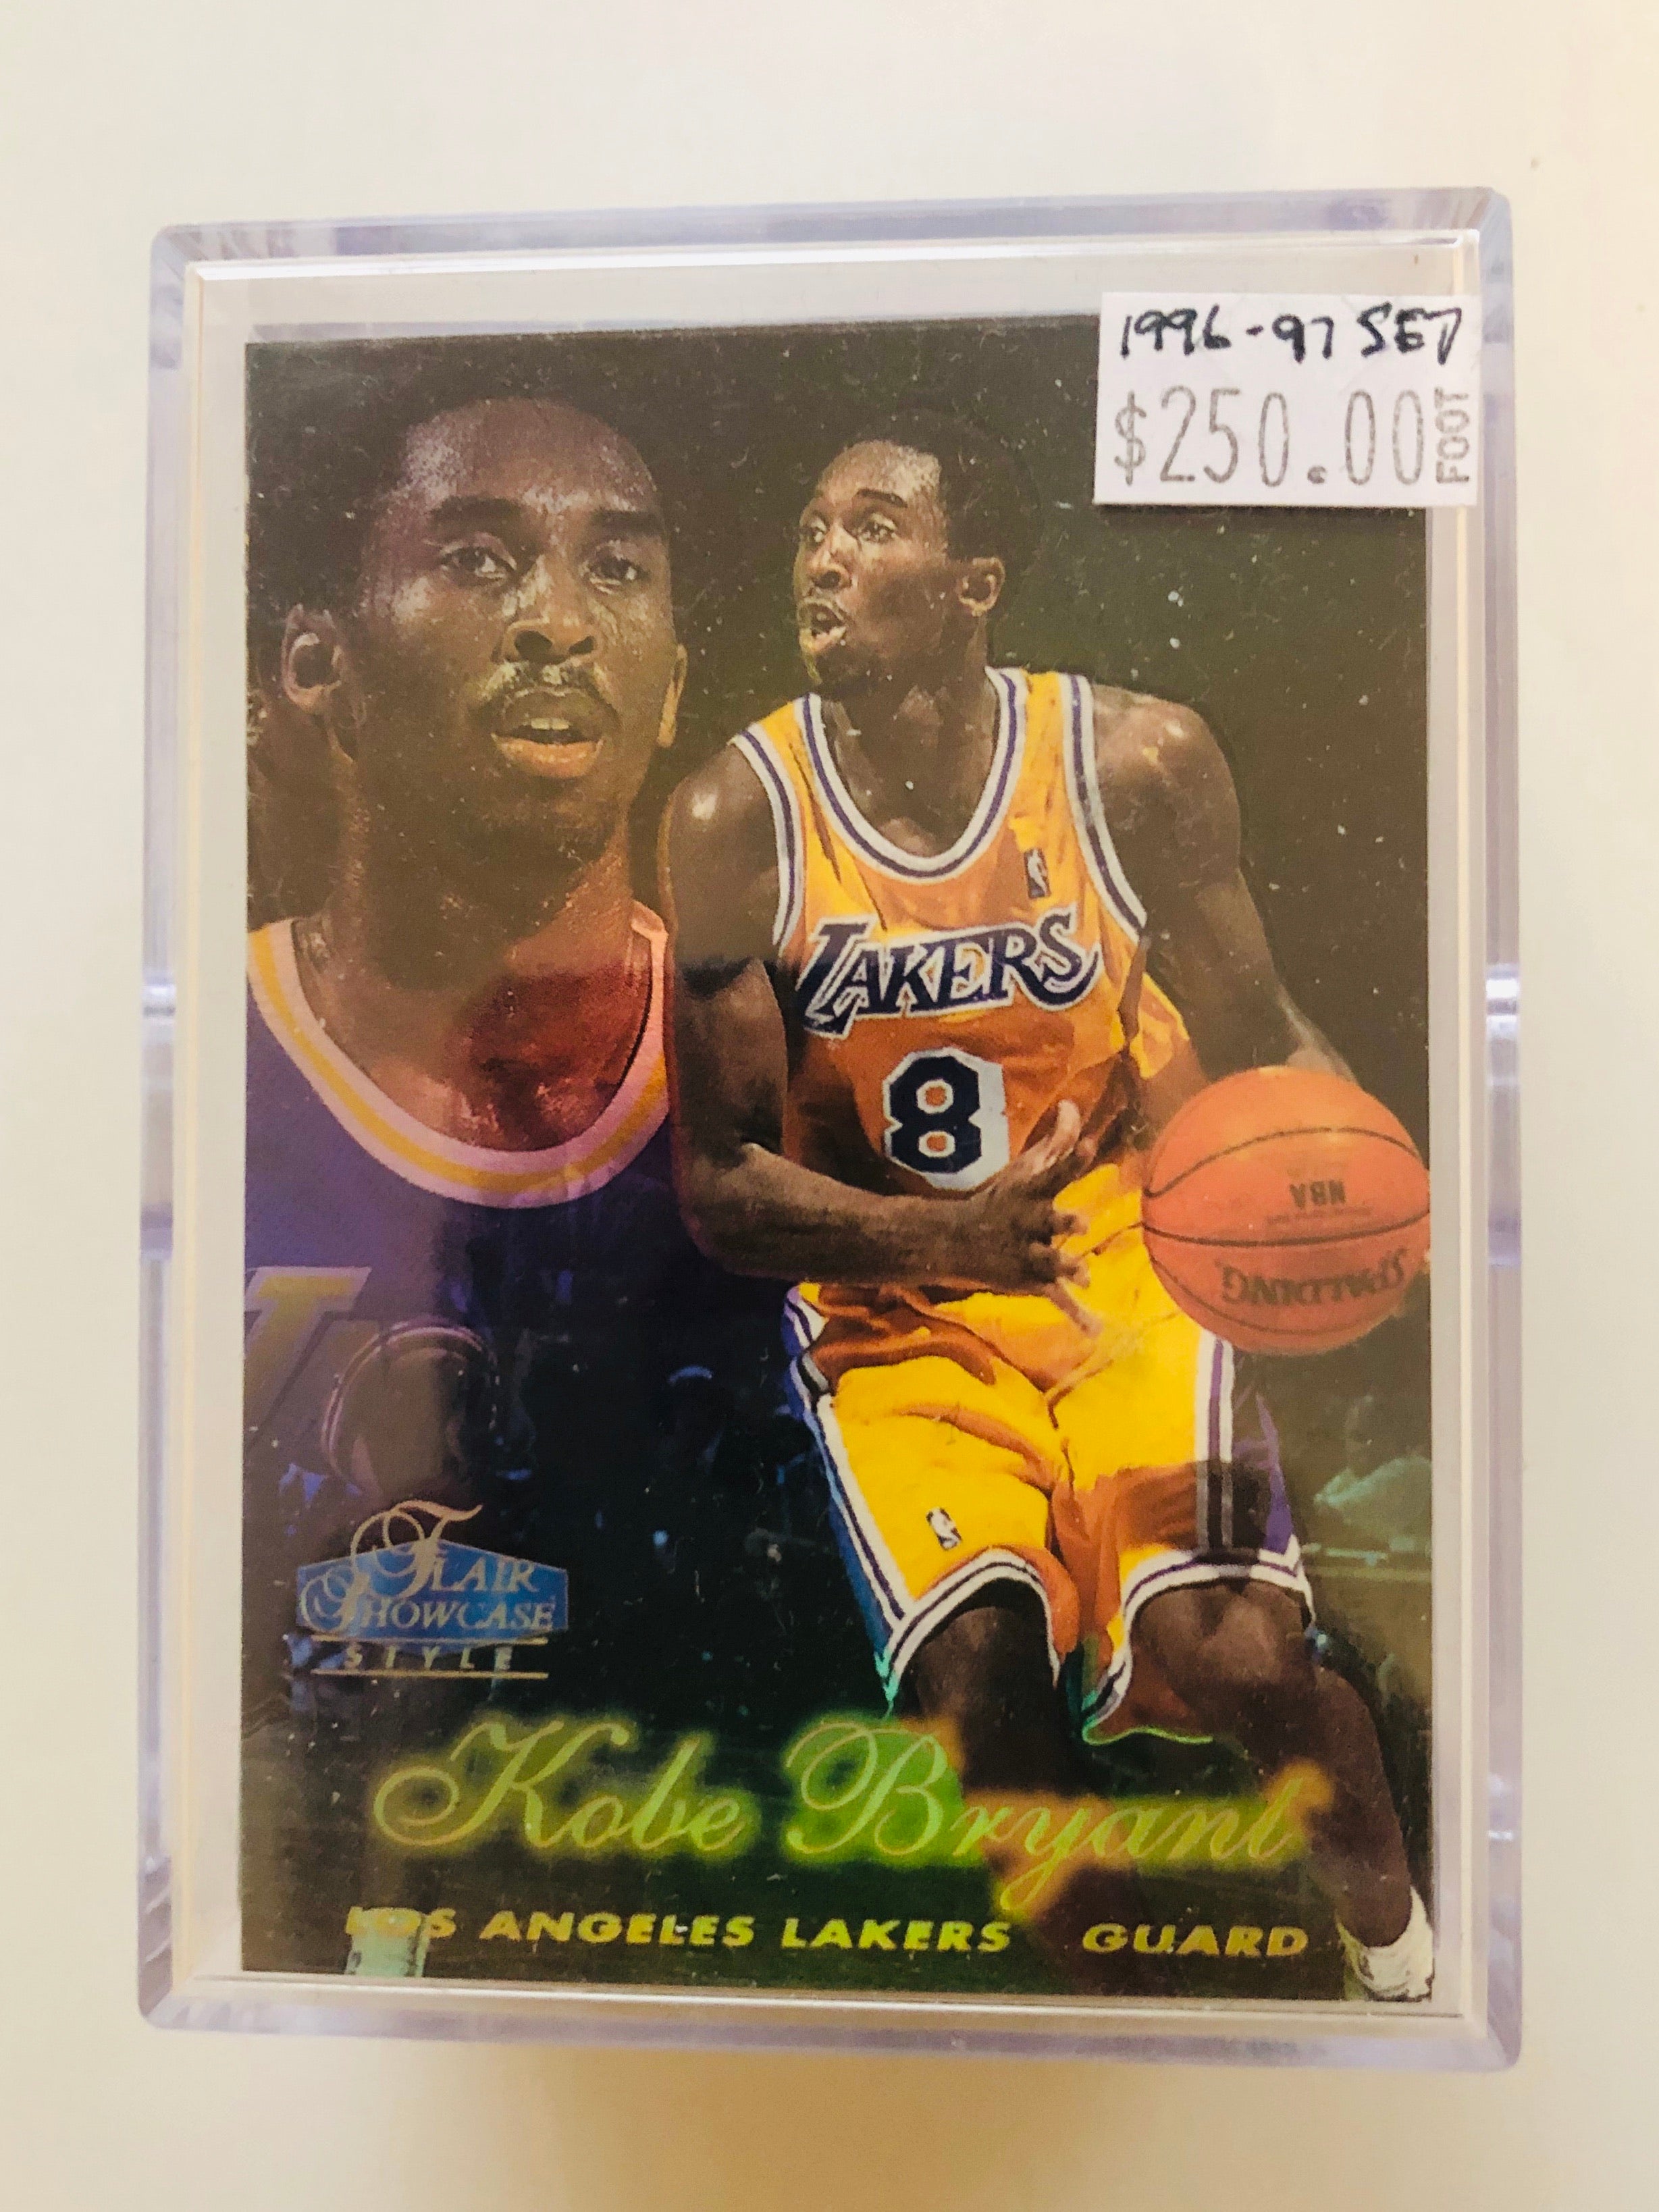 1997 Flair Showcase Kobe Bryant and great basketball cards set